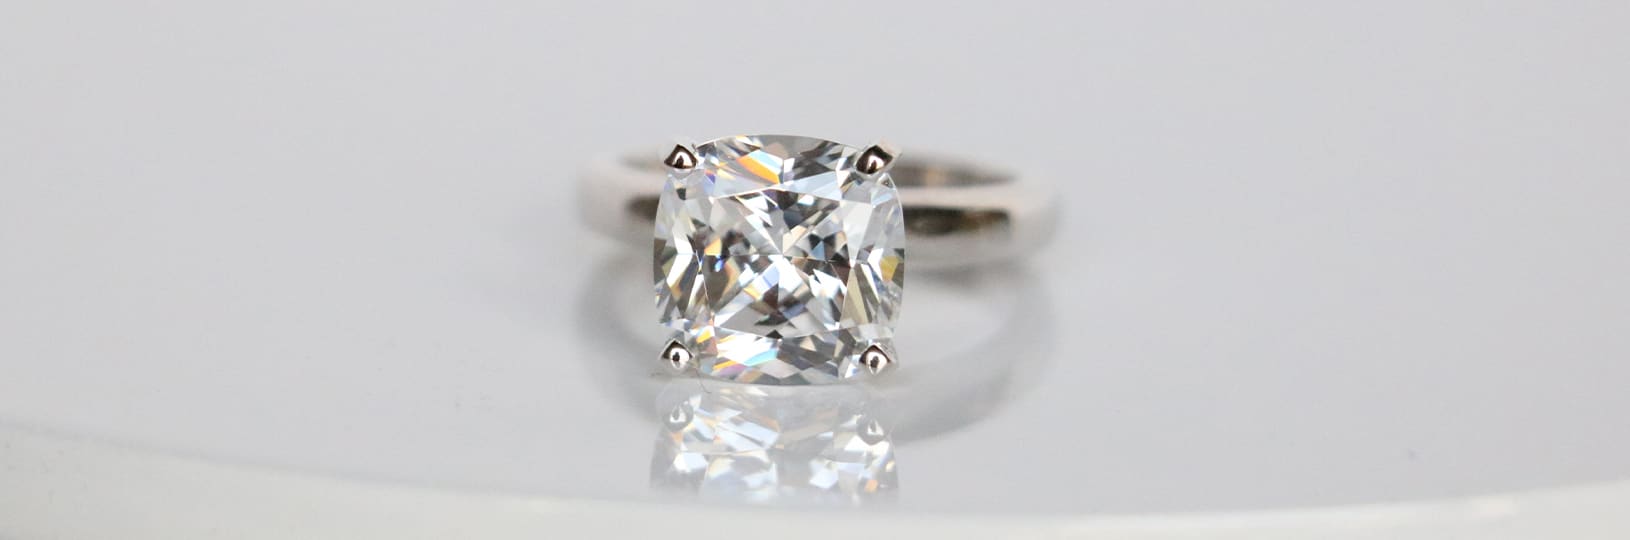 Cushion cut lab created diamond engagement ring.